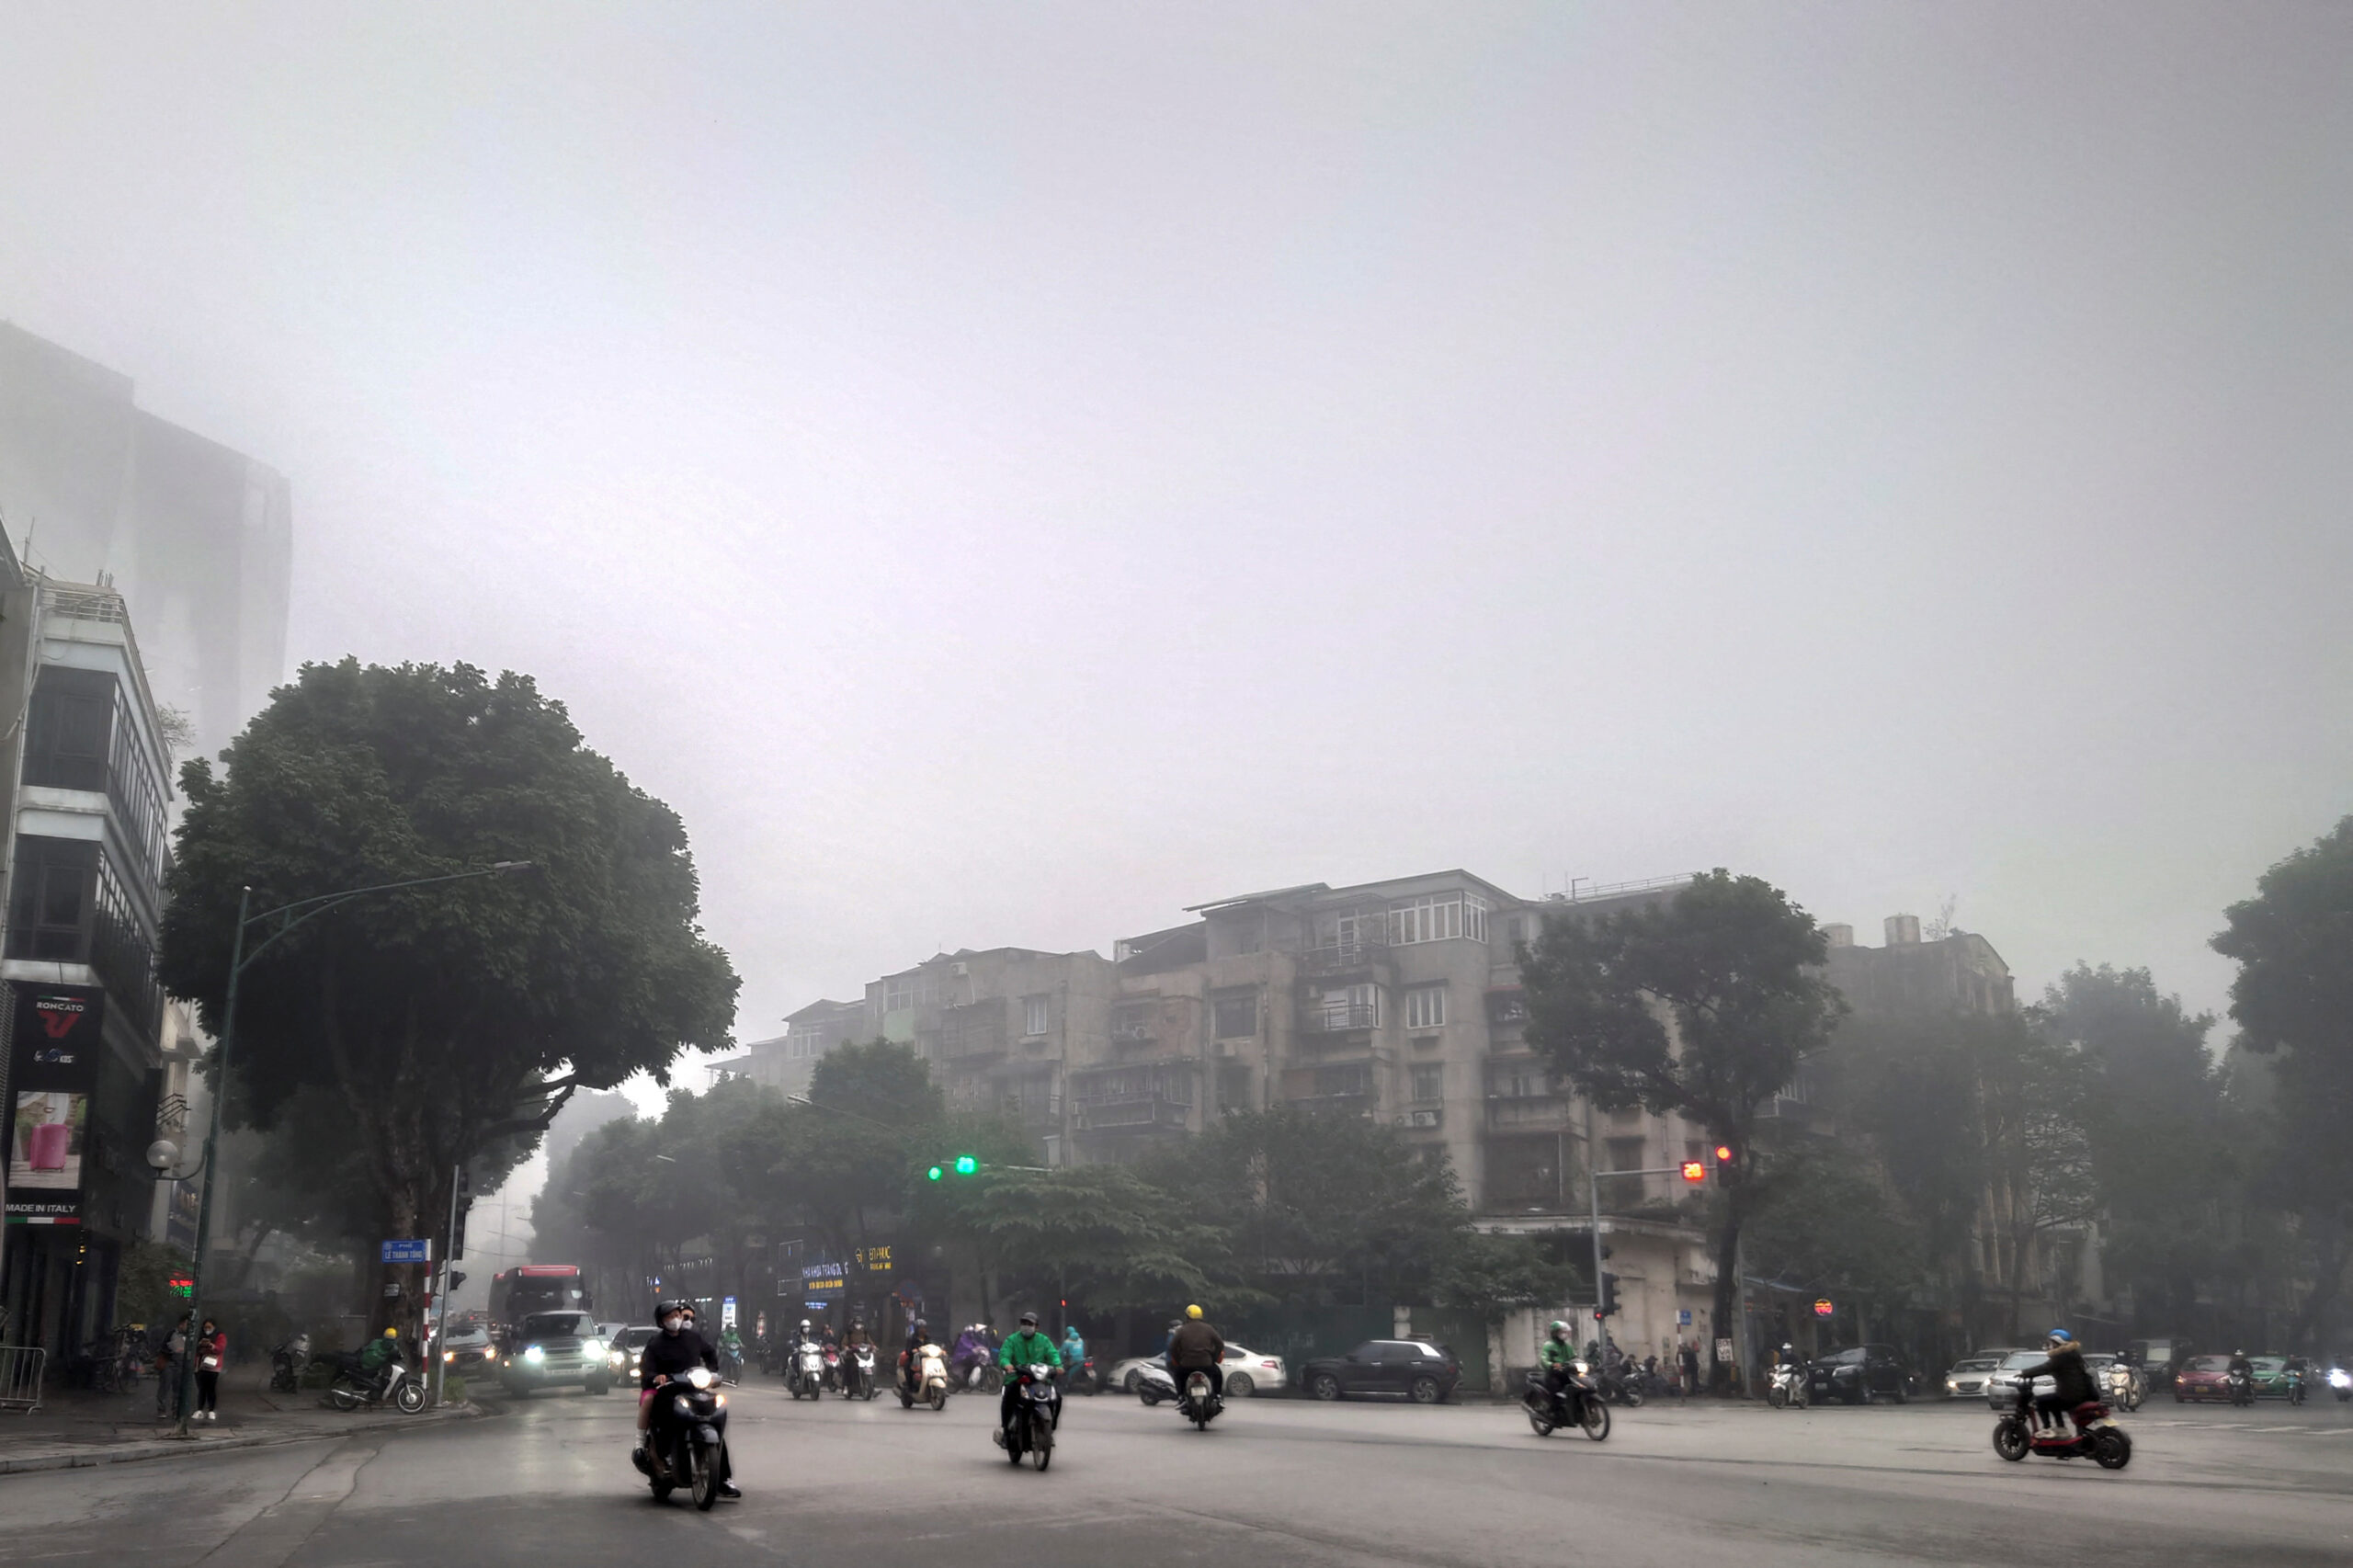 Moms ban outdoor fun as air pollution worsens in Vietnam capital